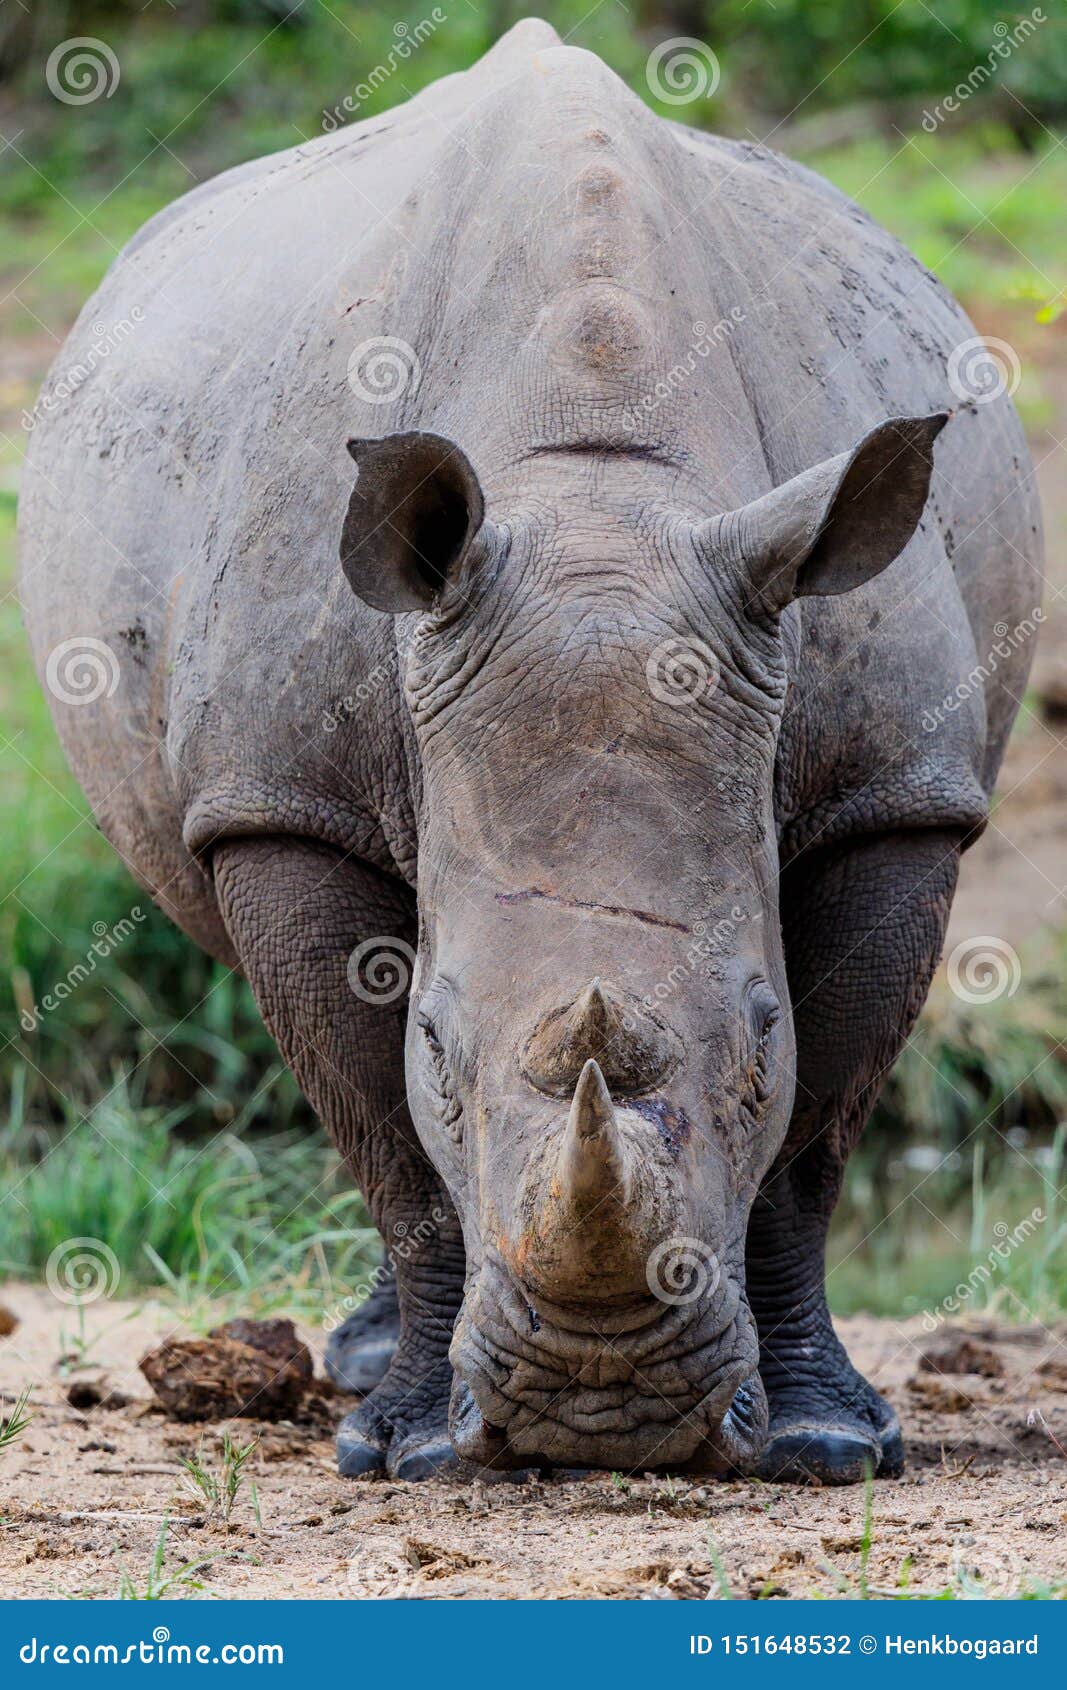 носорогу в жопе голова фото 84